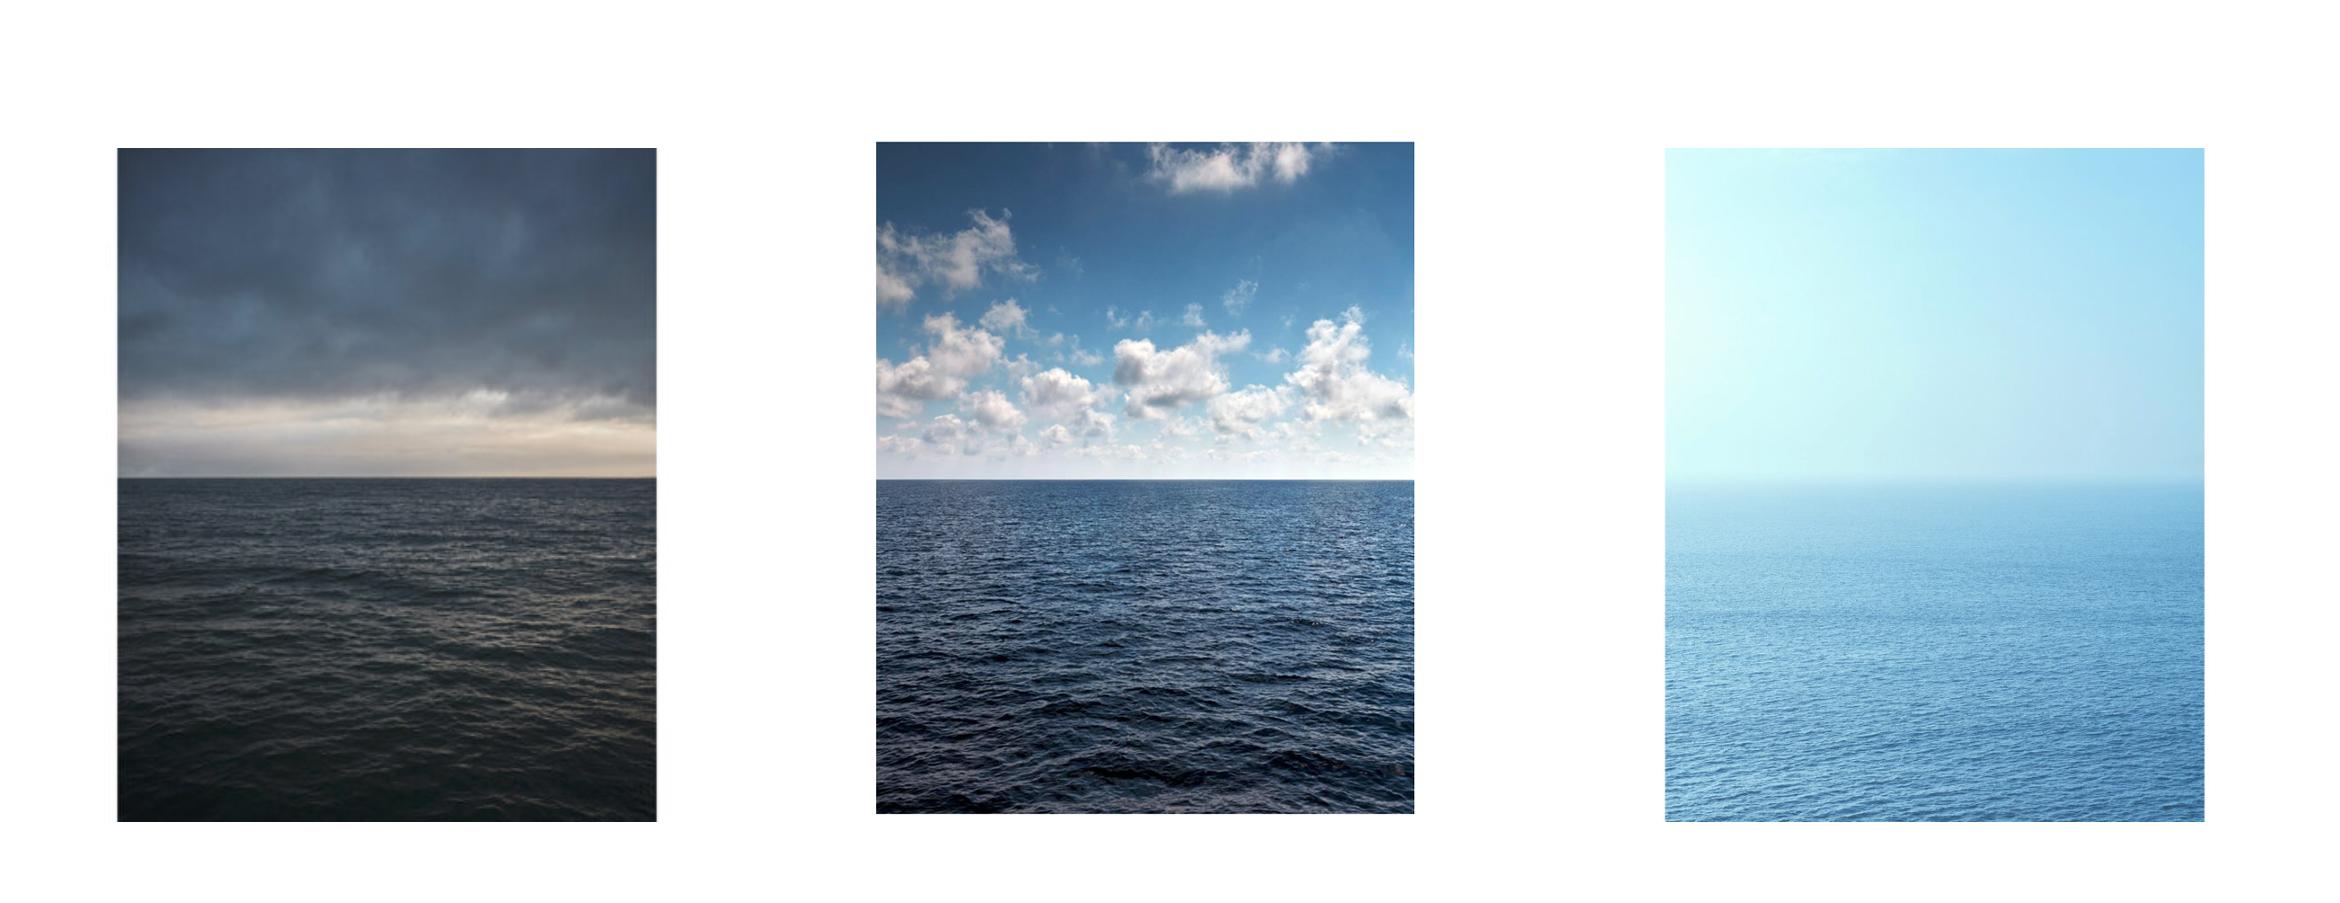 Seascape VI - large format photograph of cloudscape horizon and endless sea - Contemporary Photograph by Frank Schott